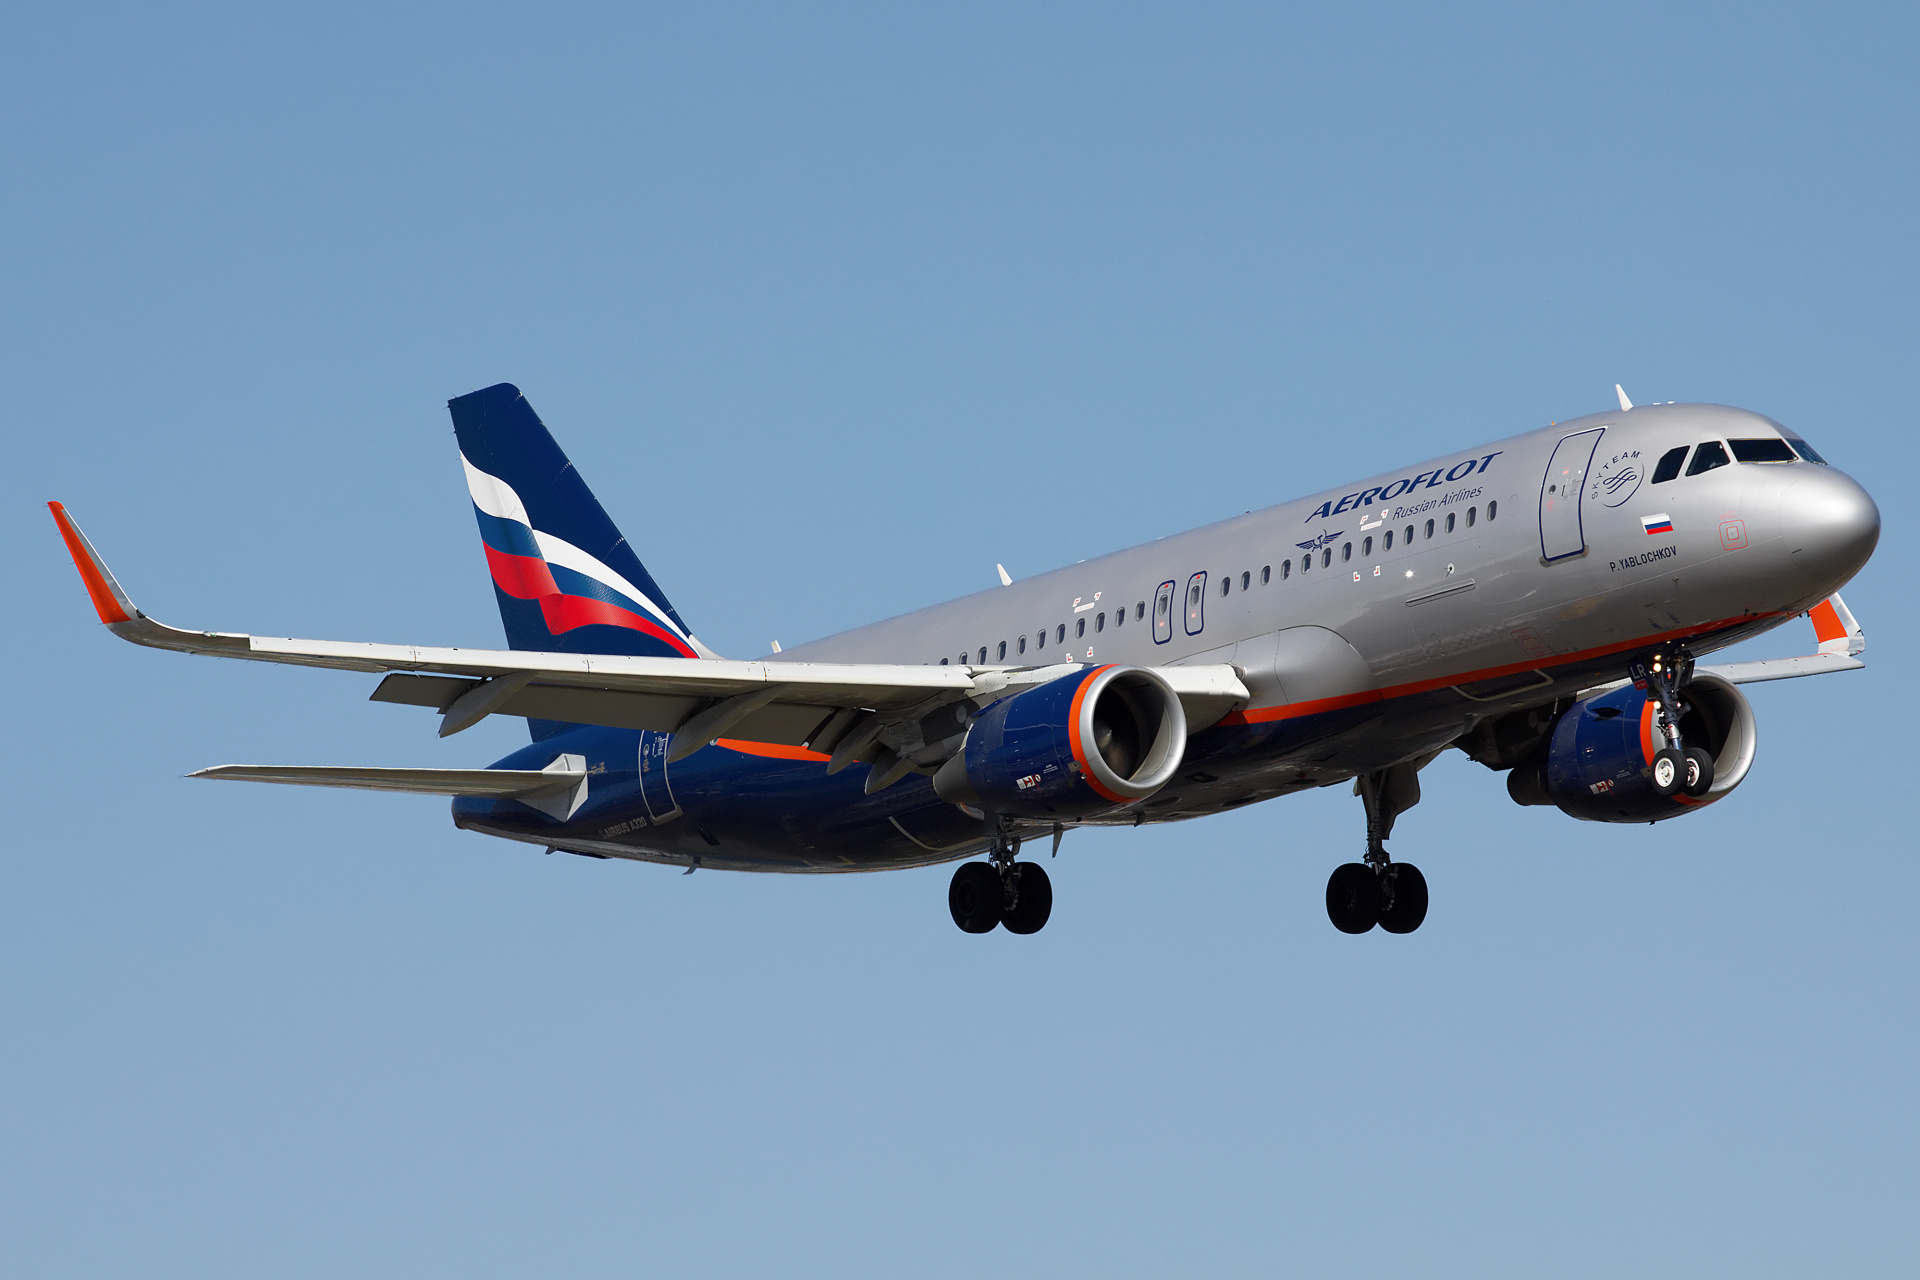 VP-BLR (Aircraft » EPWA Spotting » Airbus A320-200 » Aeroflot Russian Airlines)